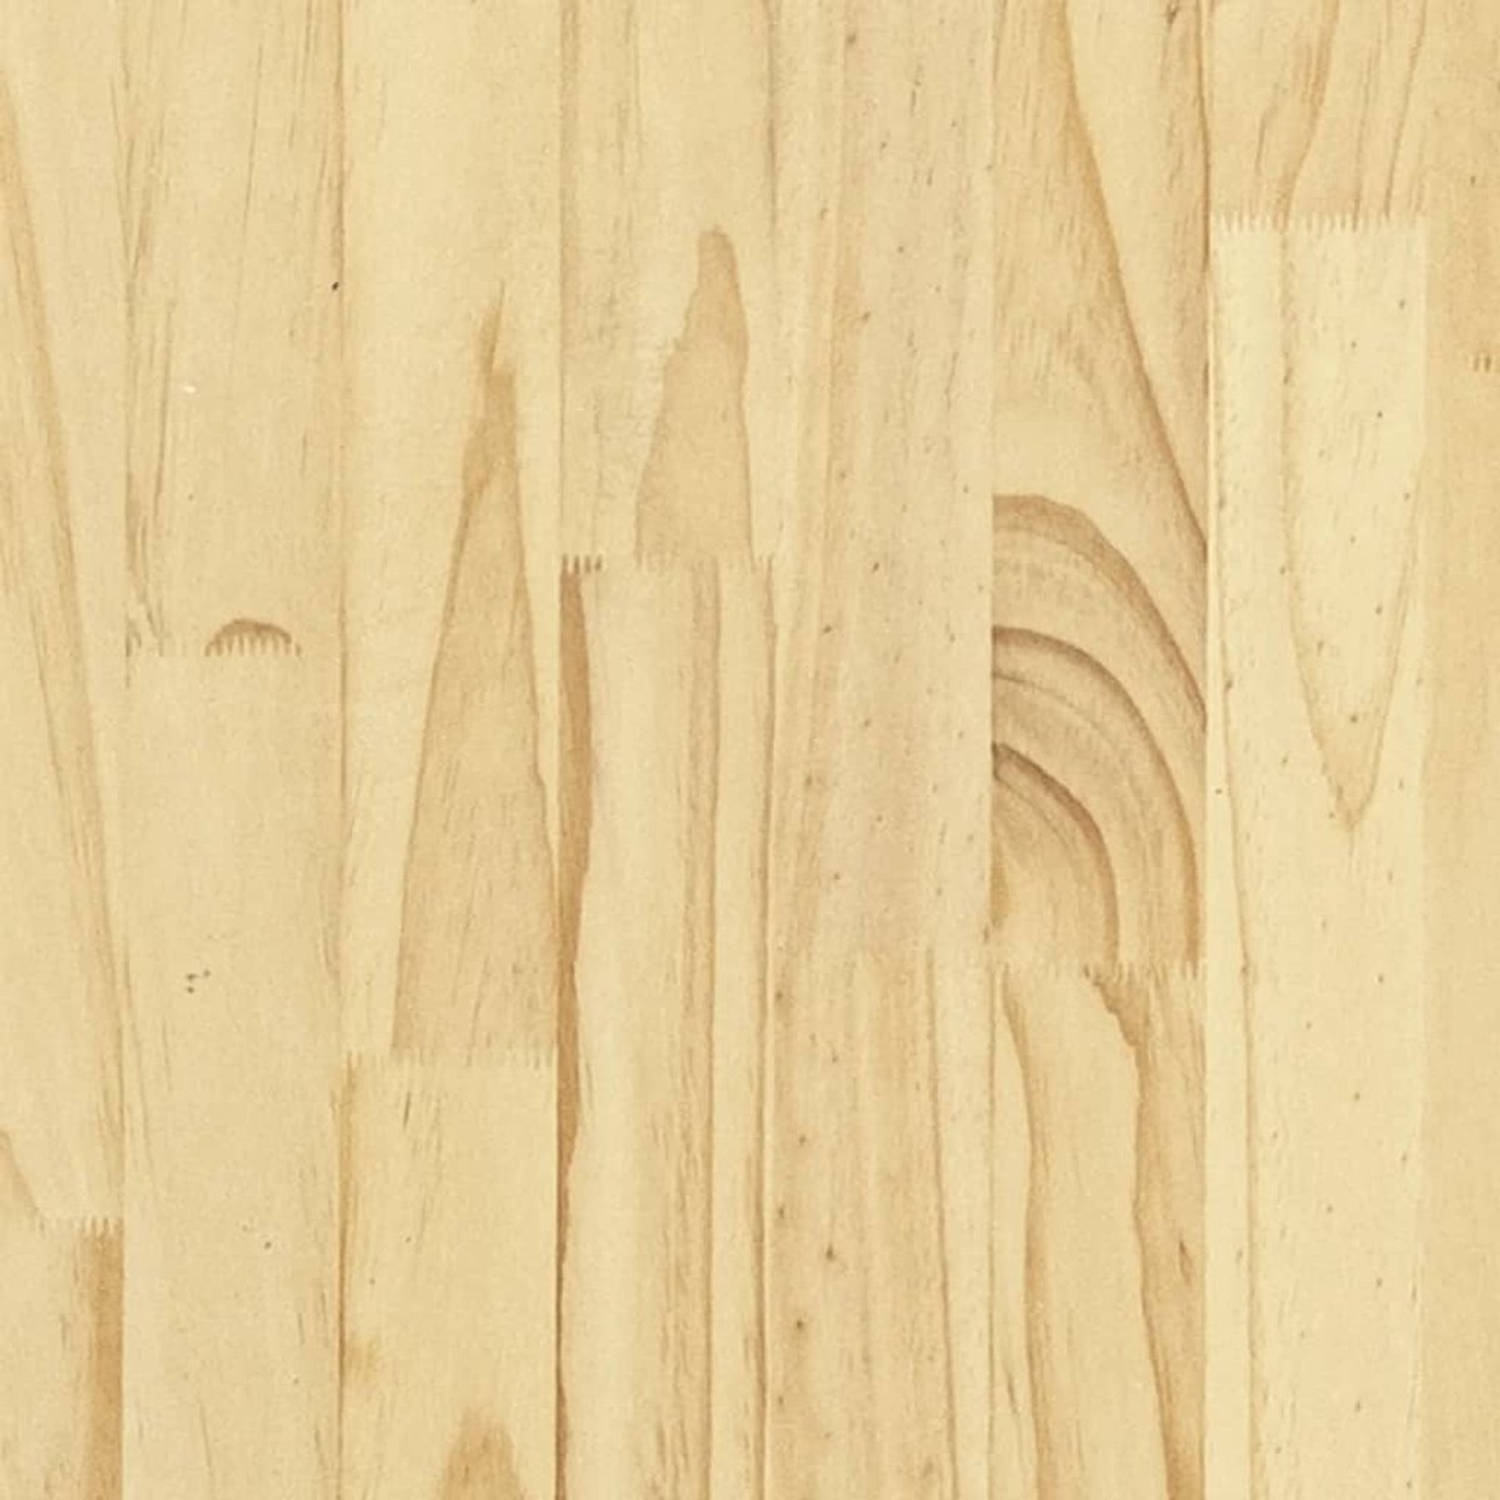 The Living Store Houten bedframe - Massief grenenhout - 160x200 cm - Stevig en duurzaam